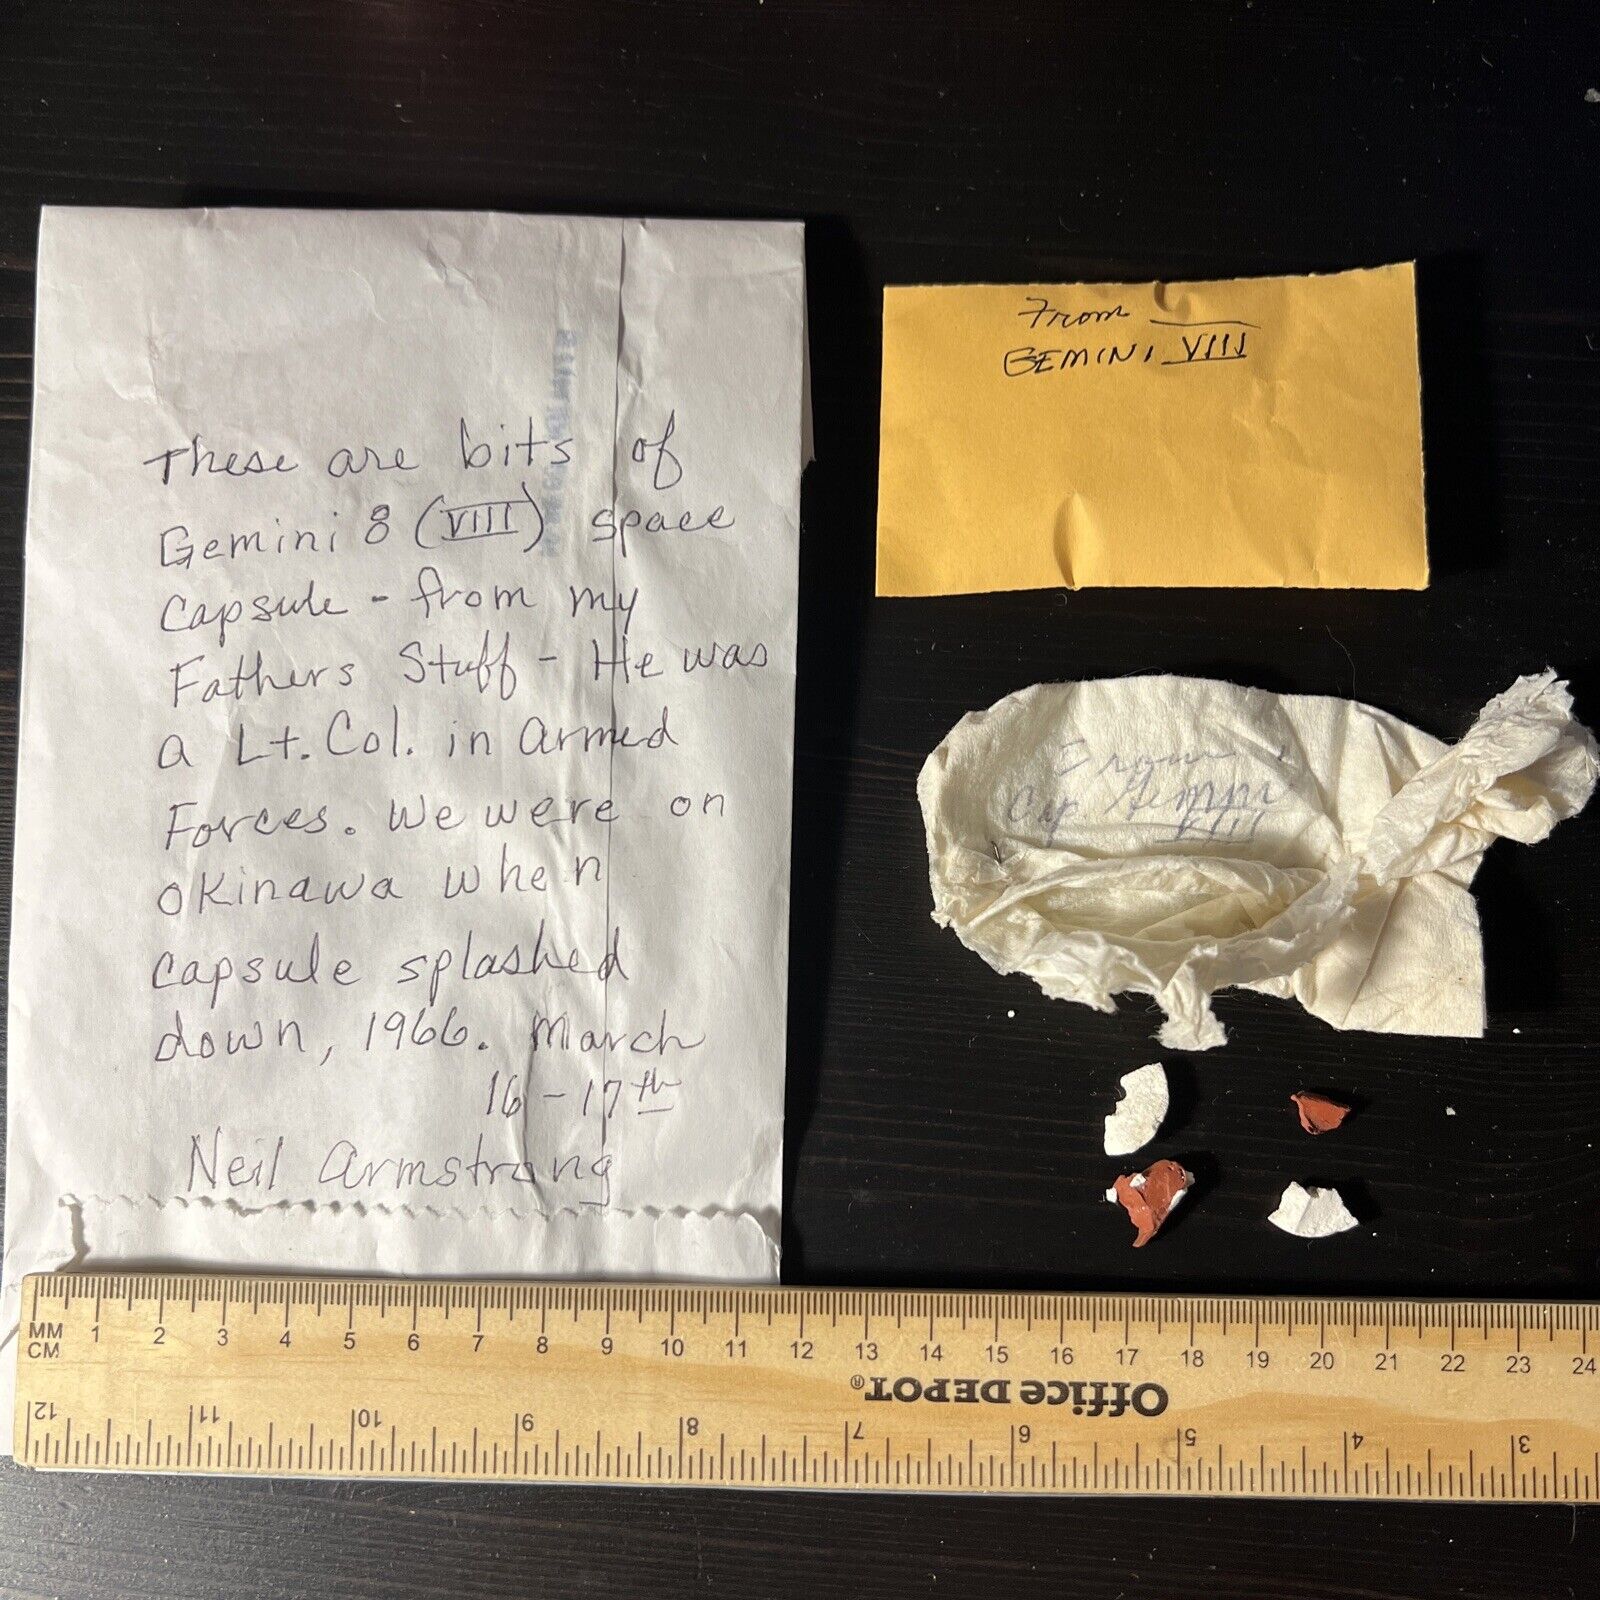 Pieces From GEMINI 8 Viii Space Capsule Debris NASA Memorabilia Armstrong Flown